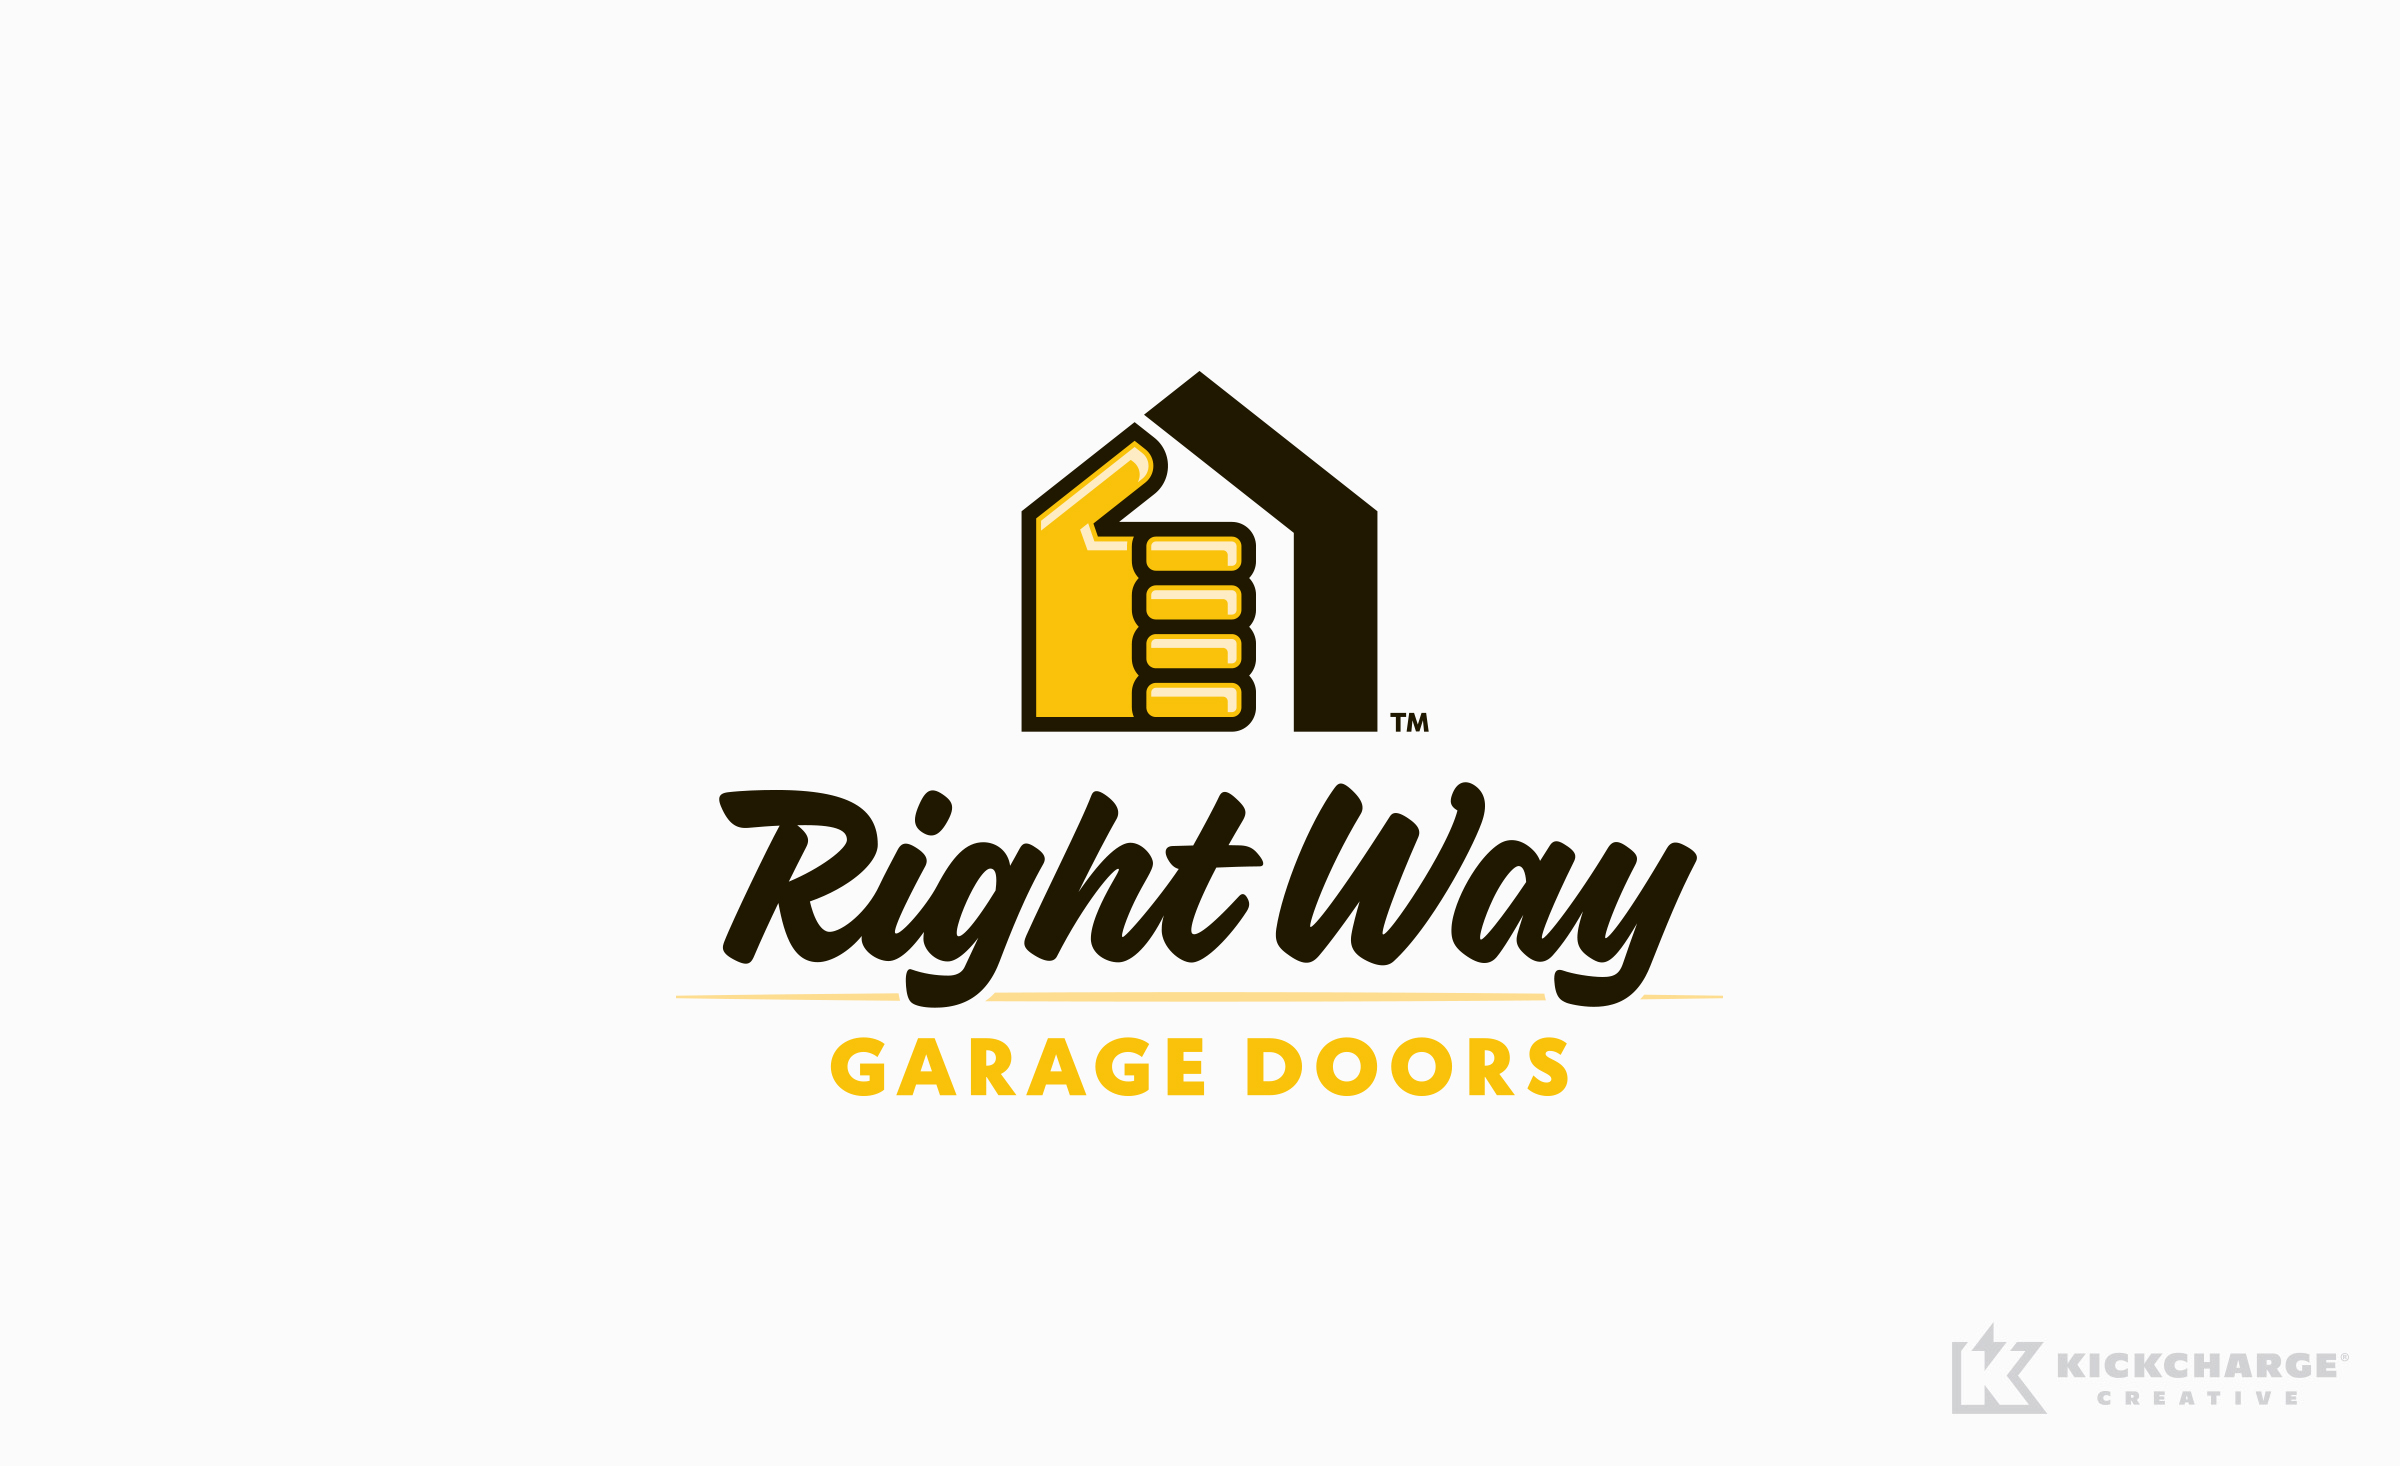 Logo design for Right Way Garage Doors